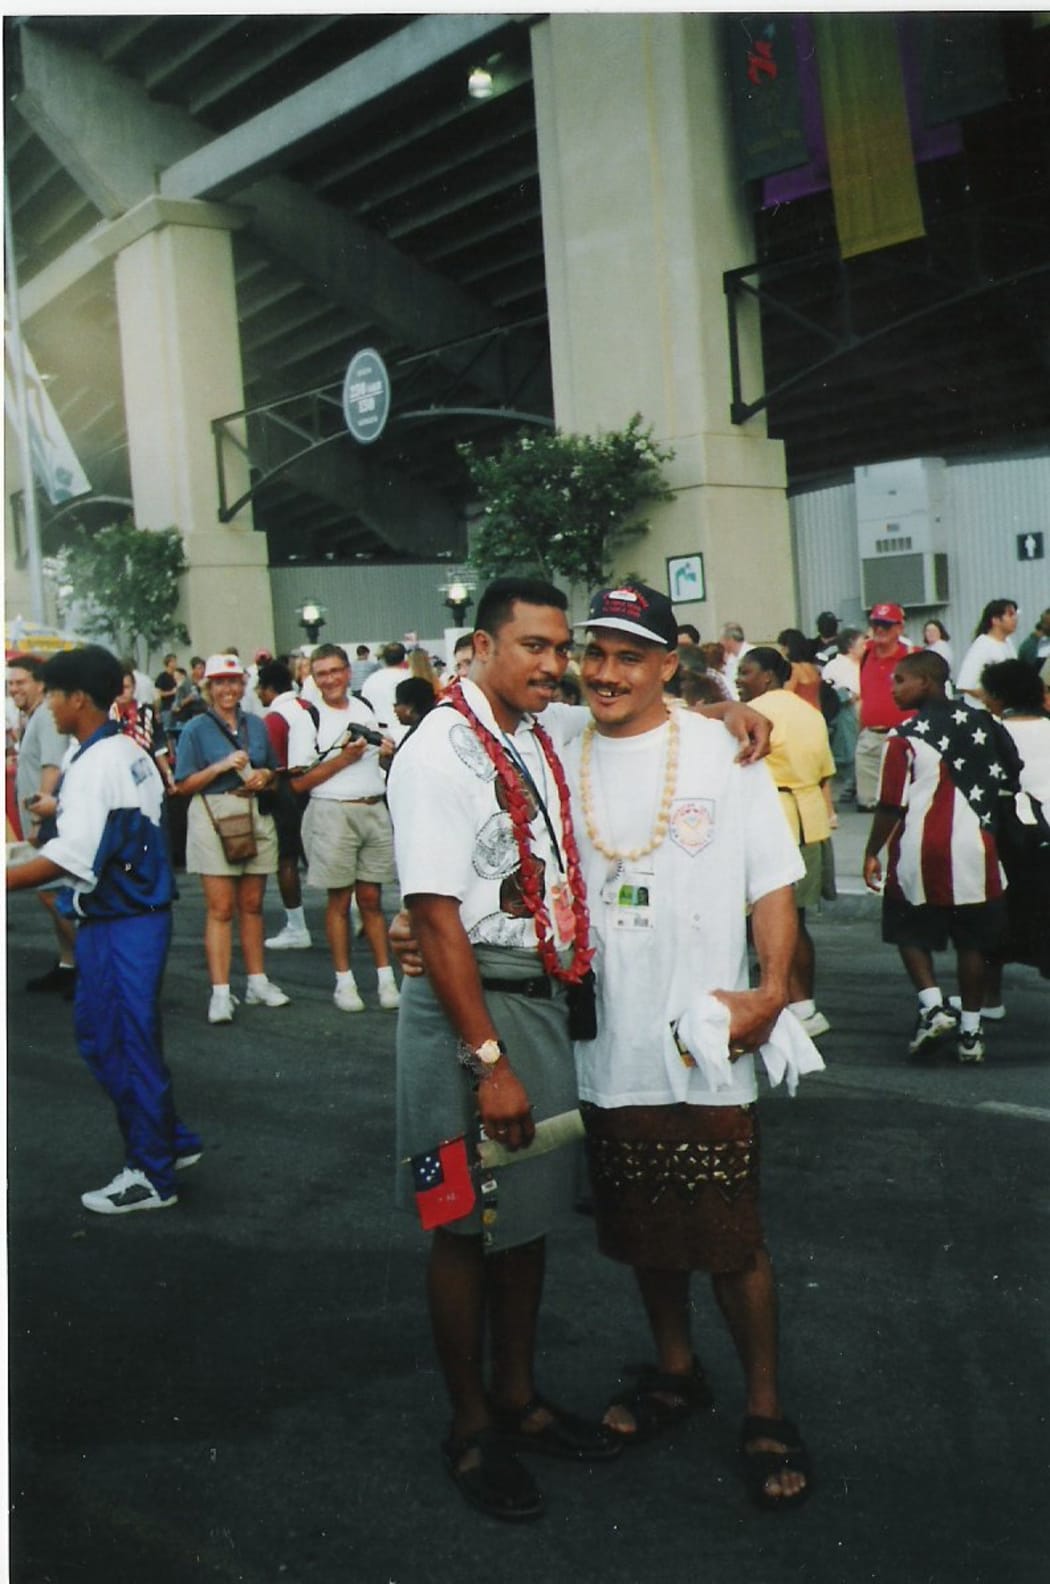 Samoan boxers Samuela Leuii (left) and Maselino Masoe (right) both competed at the 1996 Summer Olympics.